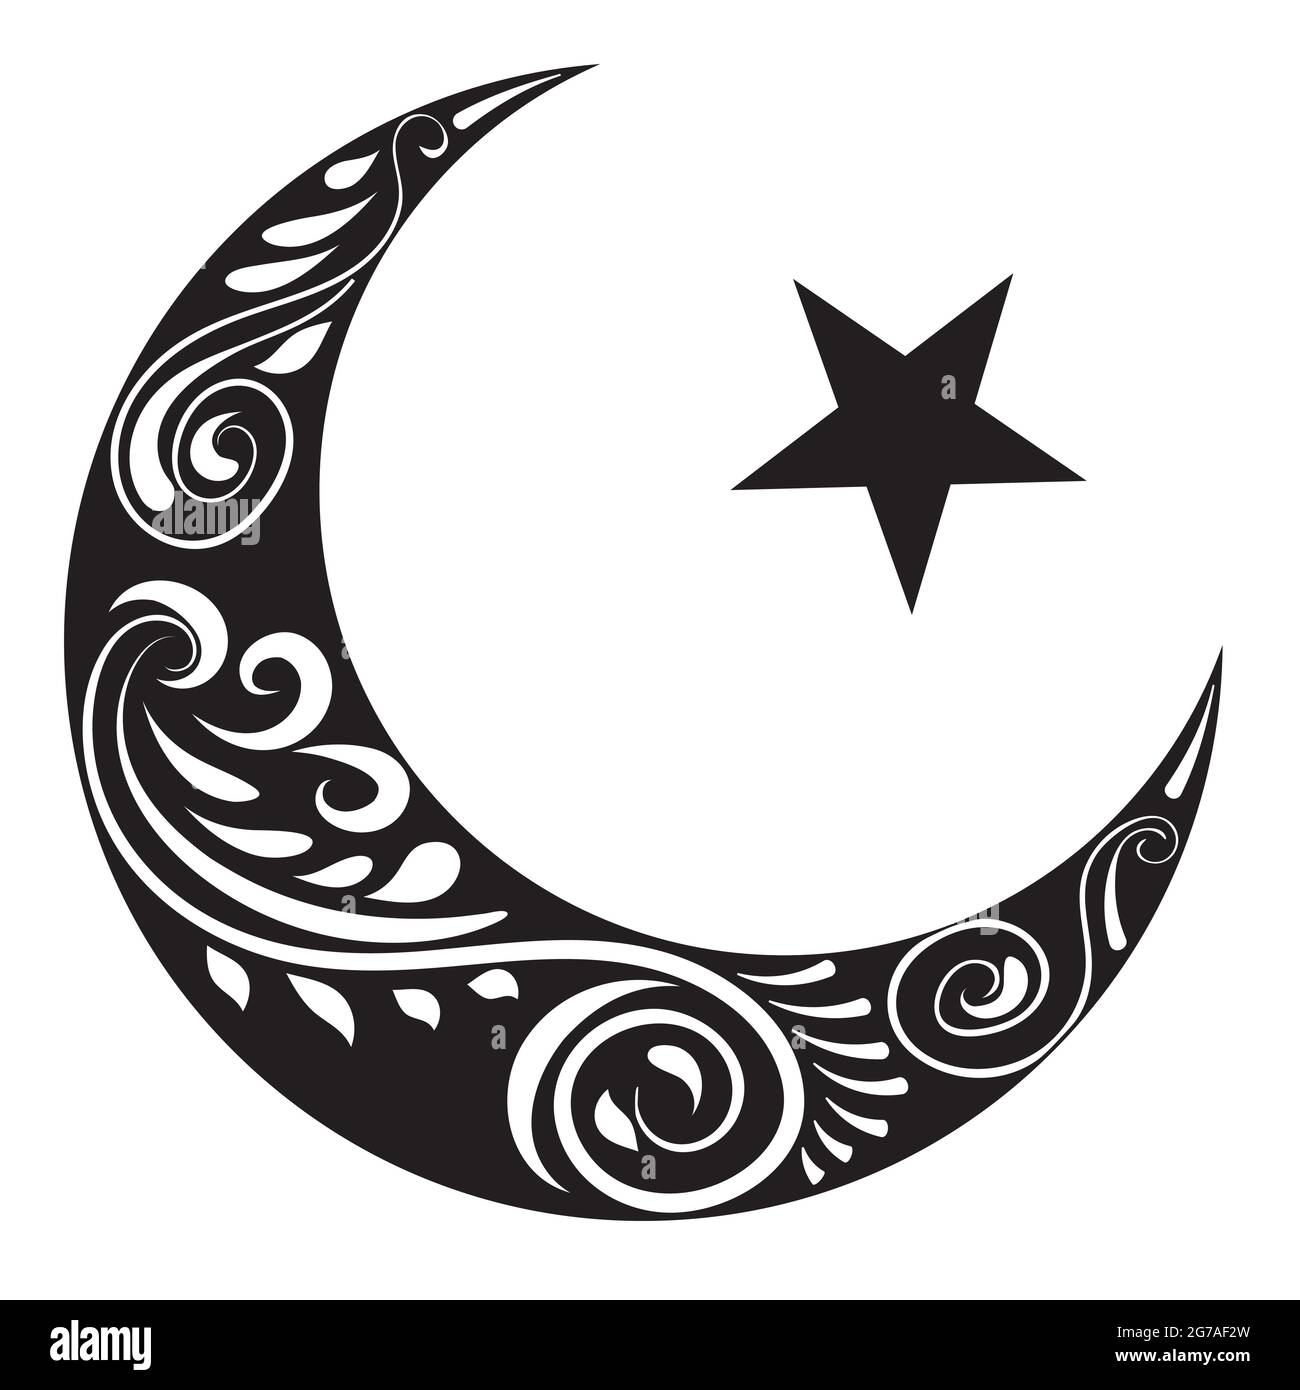 Decorative ornamental crescent moon and star design. Stock Vector